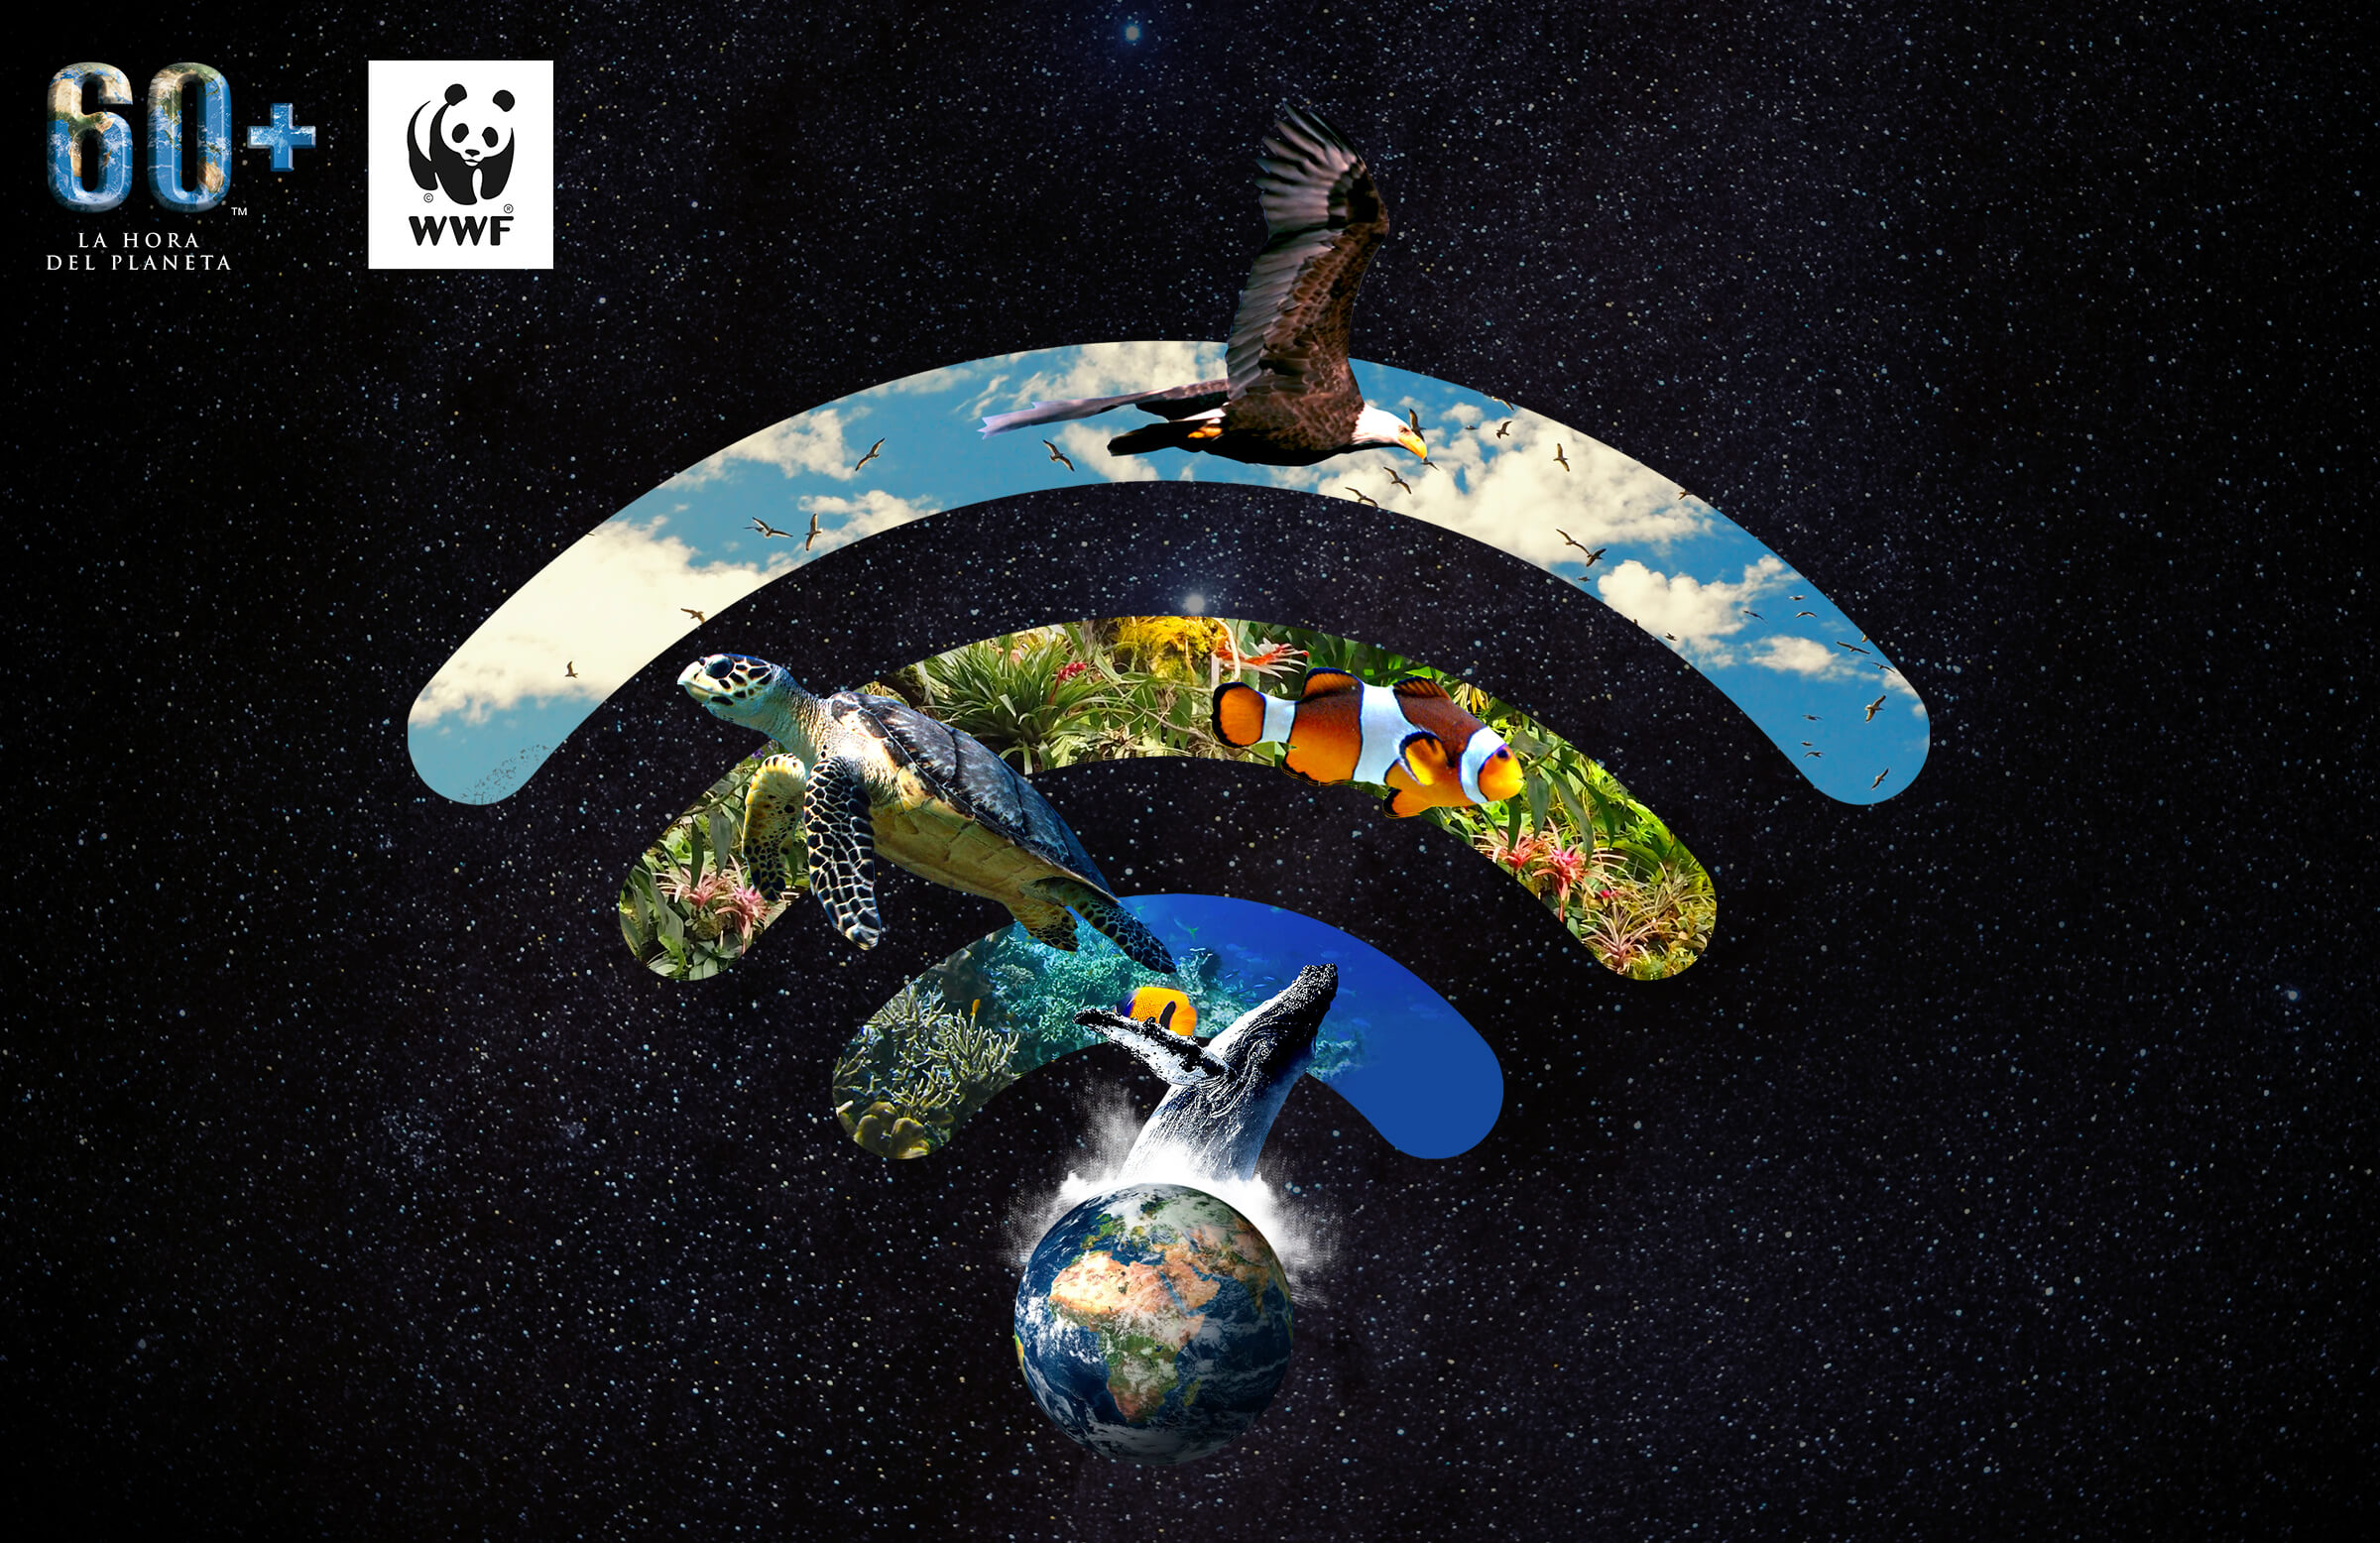 EARTH HOUR WWF